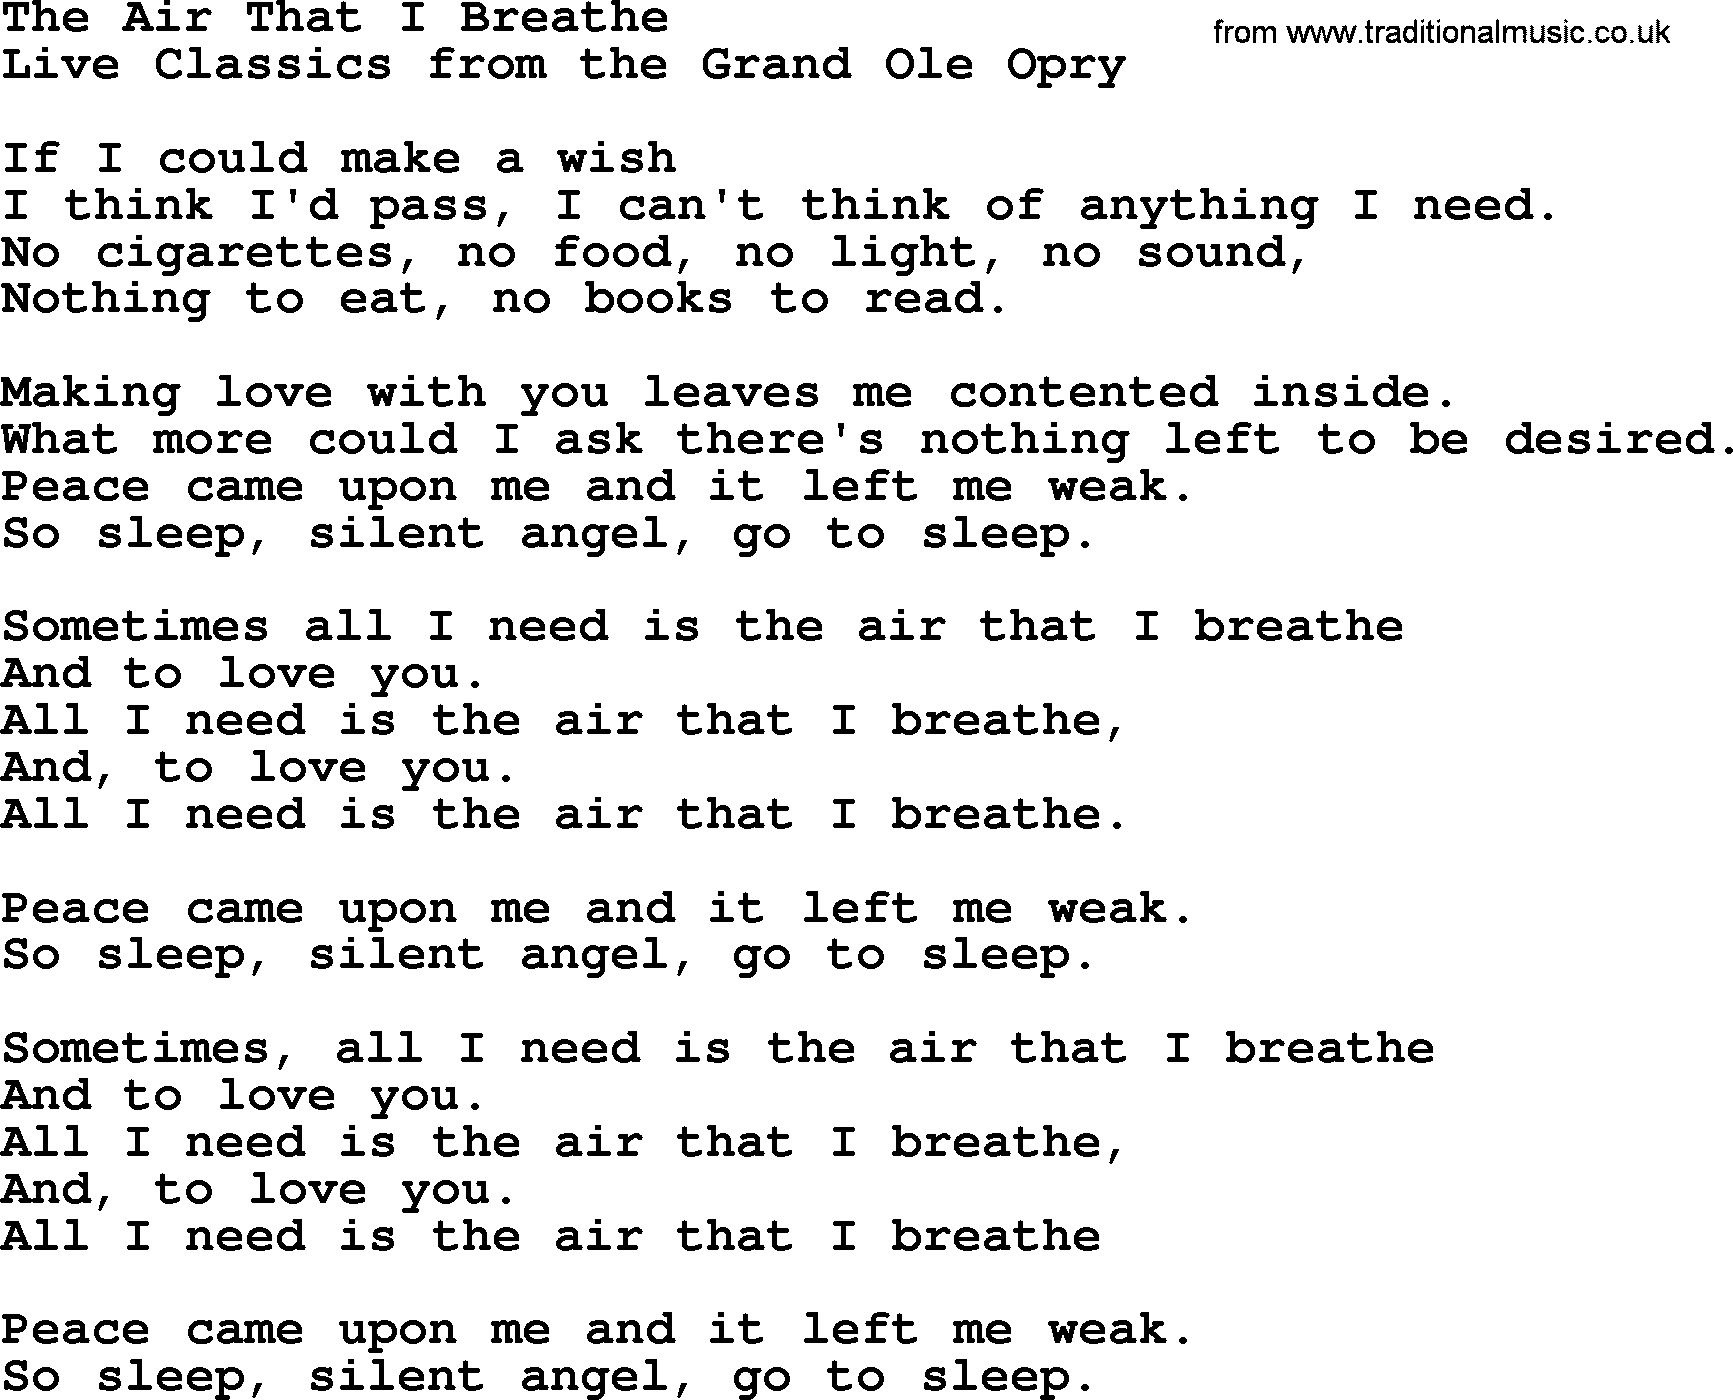 Marty Robbins song: The Air That I Breathe, lyrics